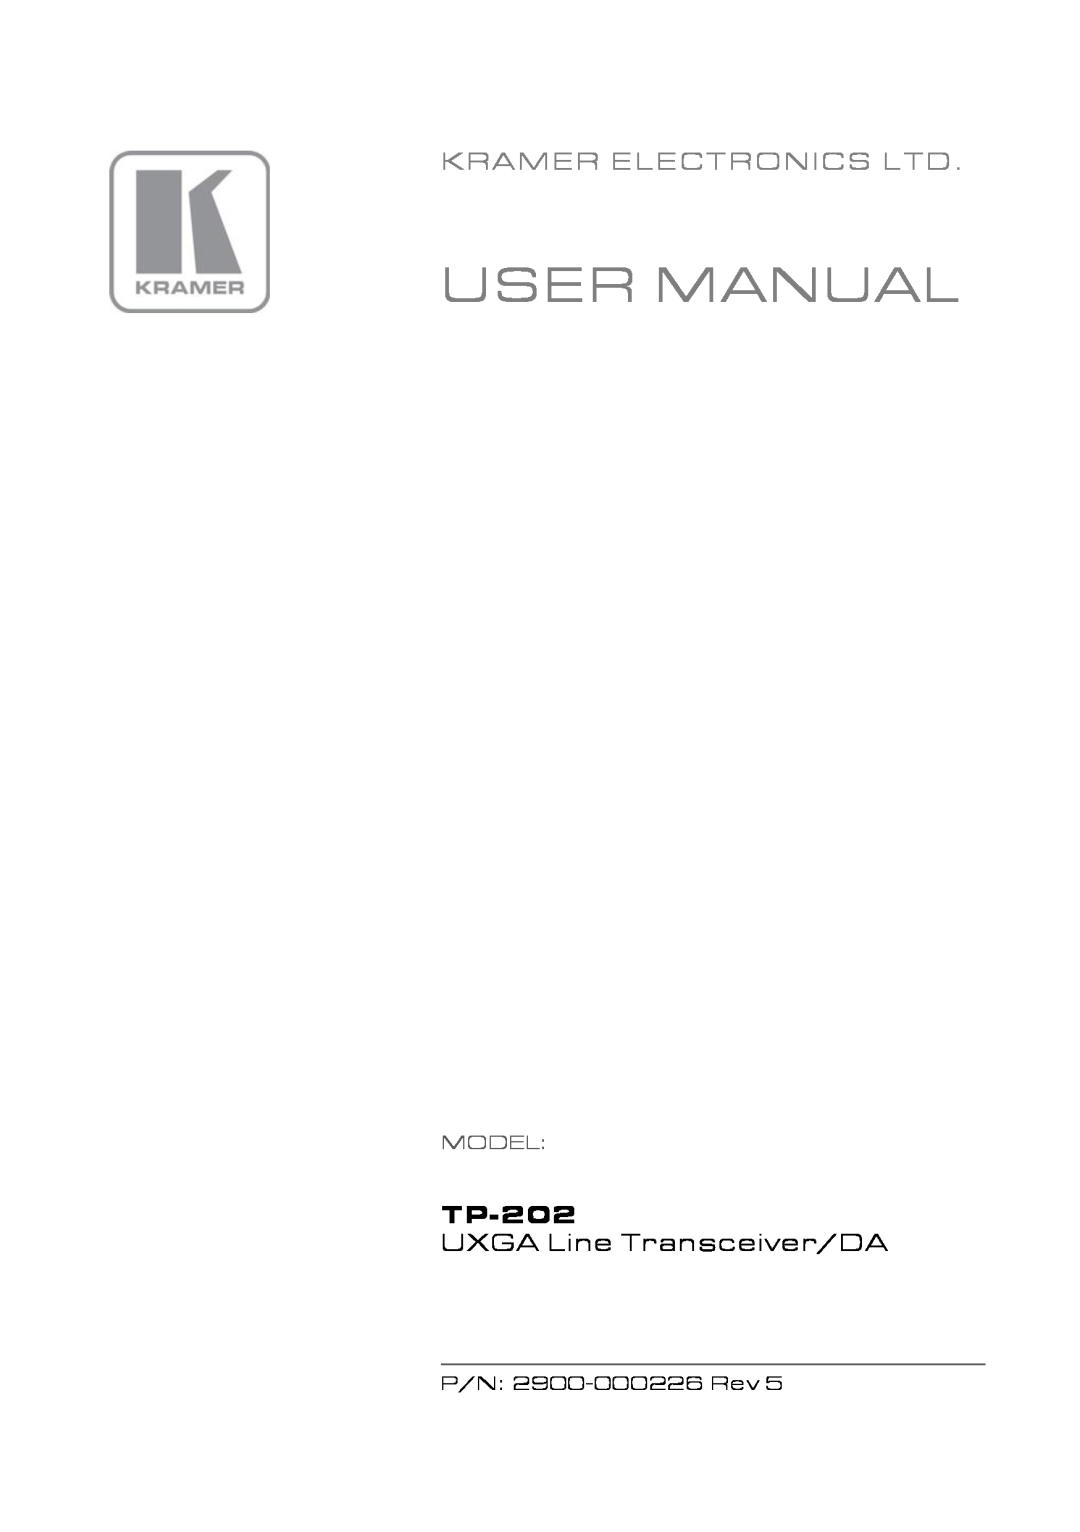 Kramer Electronics TP-202 user manual UXGA Line Transceiver/DA, Model 